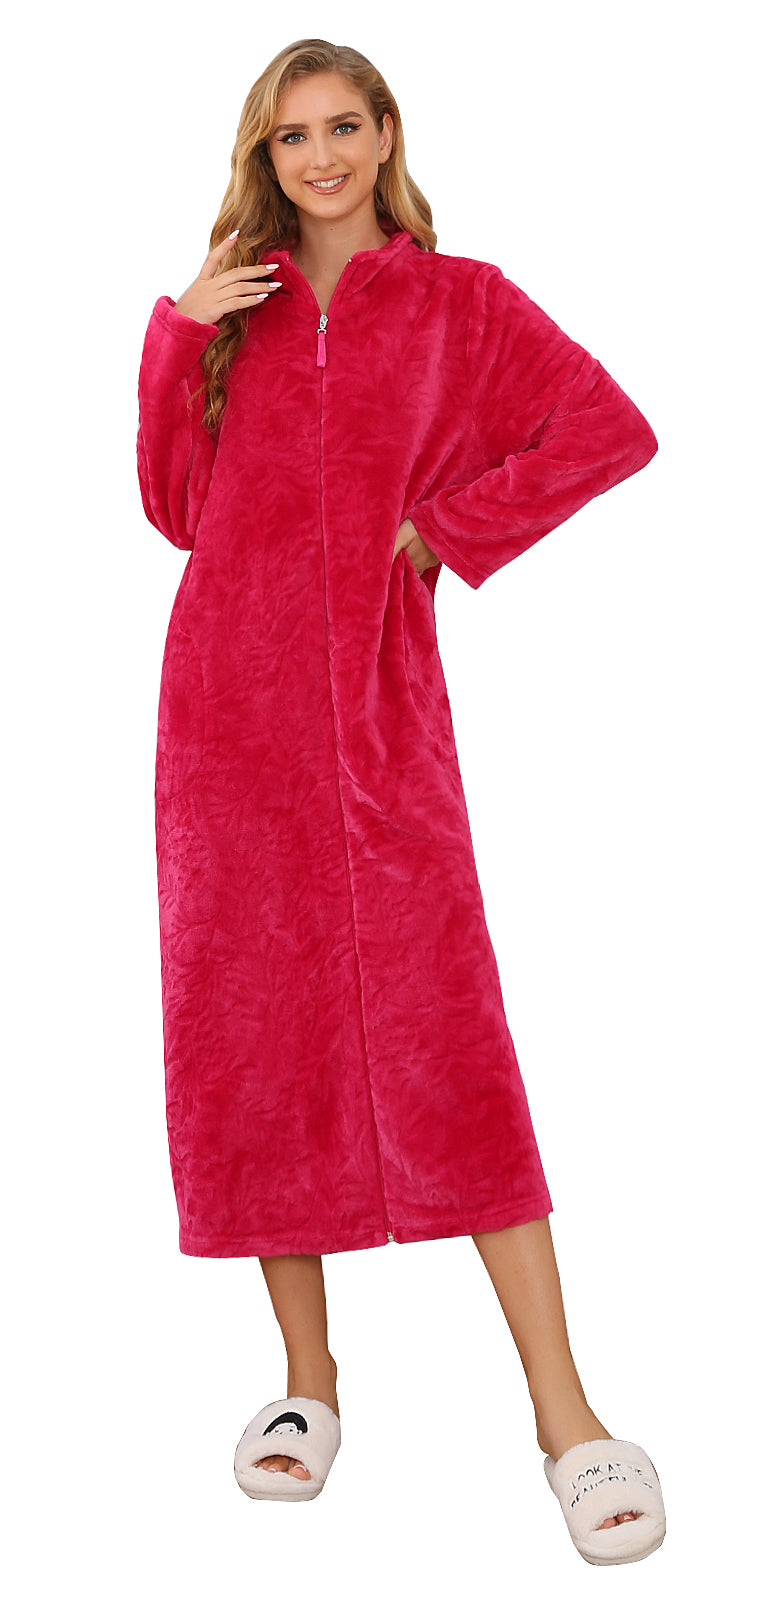 Men's Plush Soft Warm Fleece Bathrobe with Hood, Comfy Men's Robe